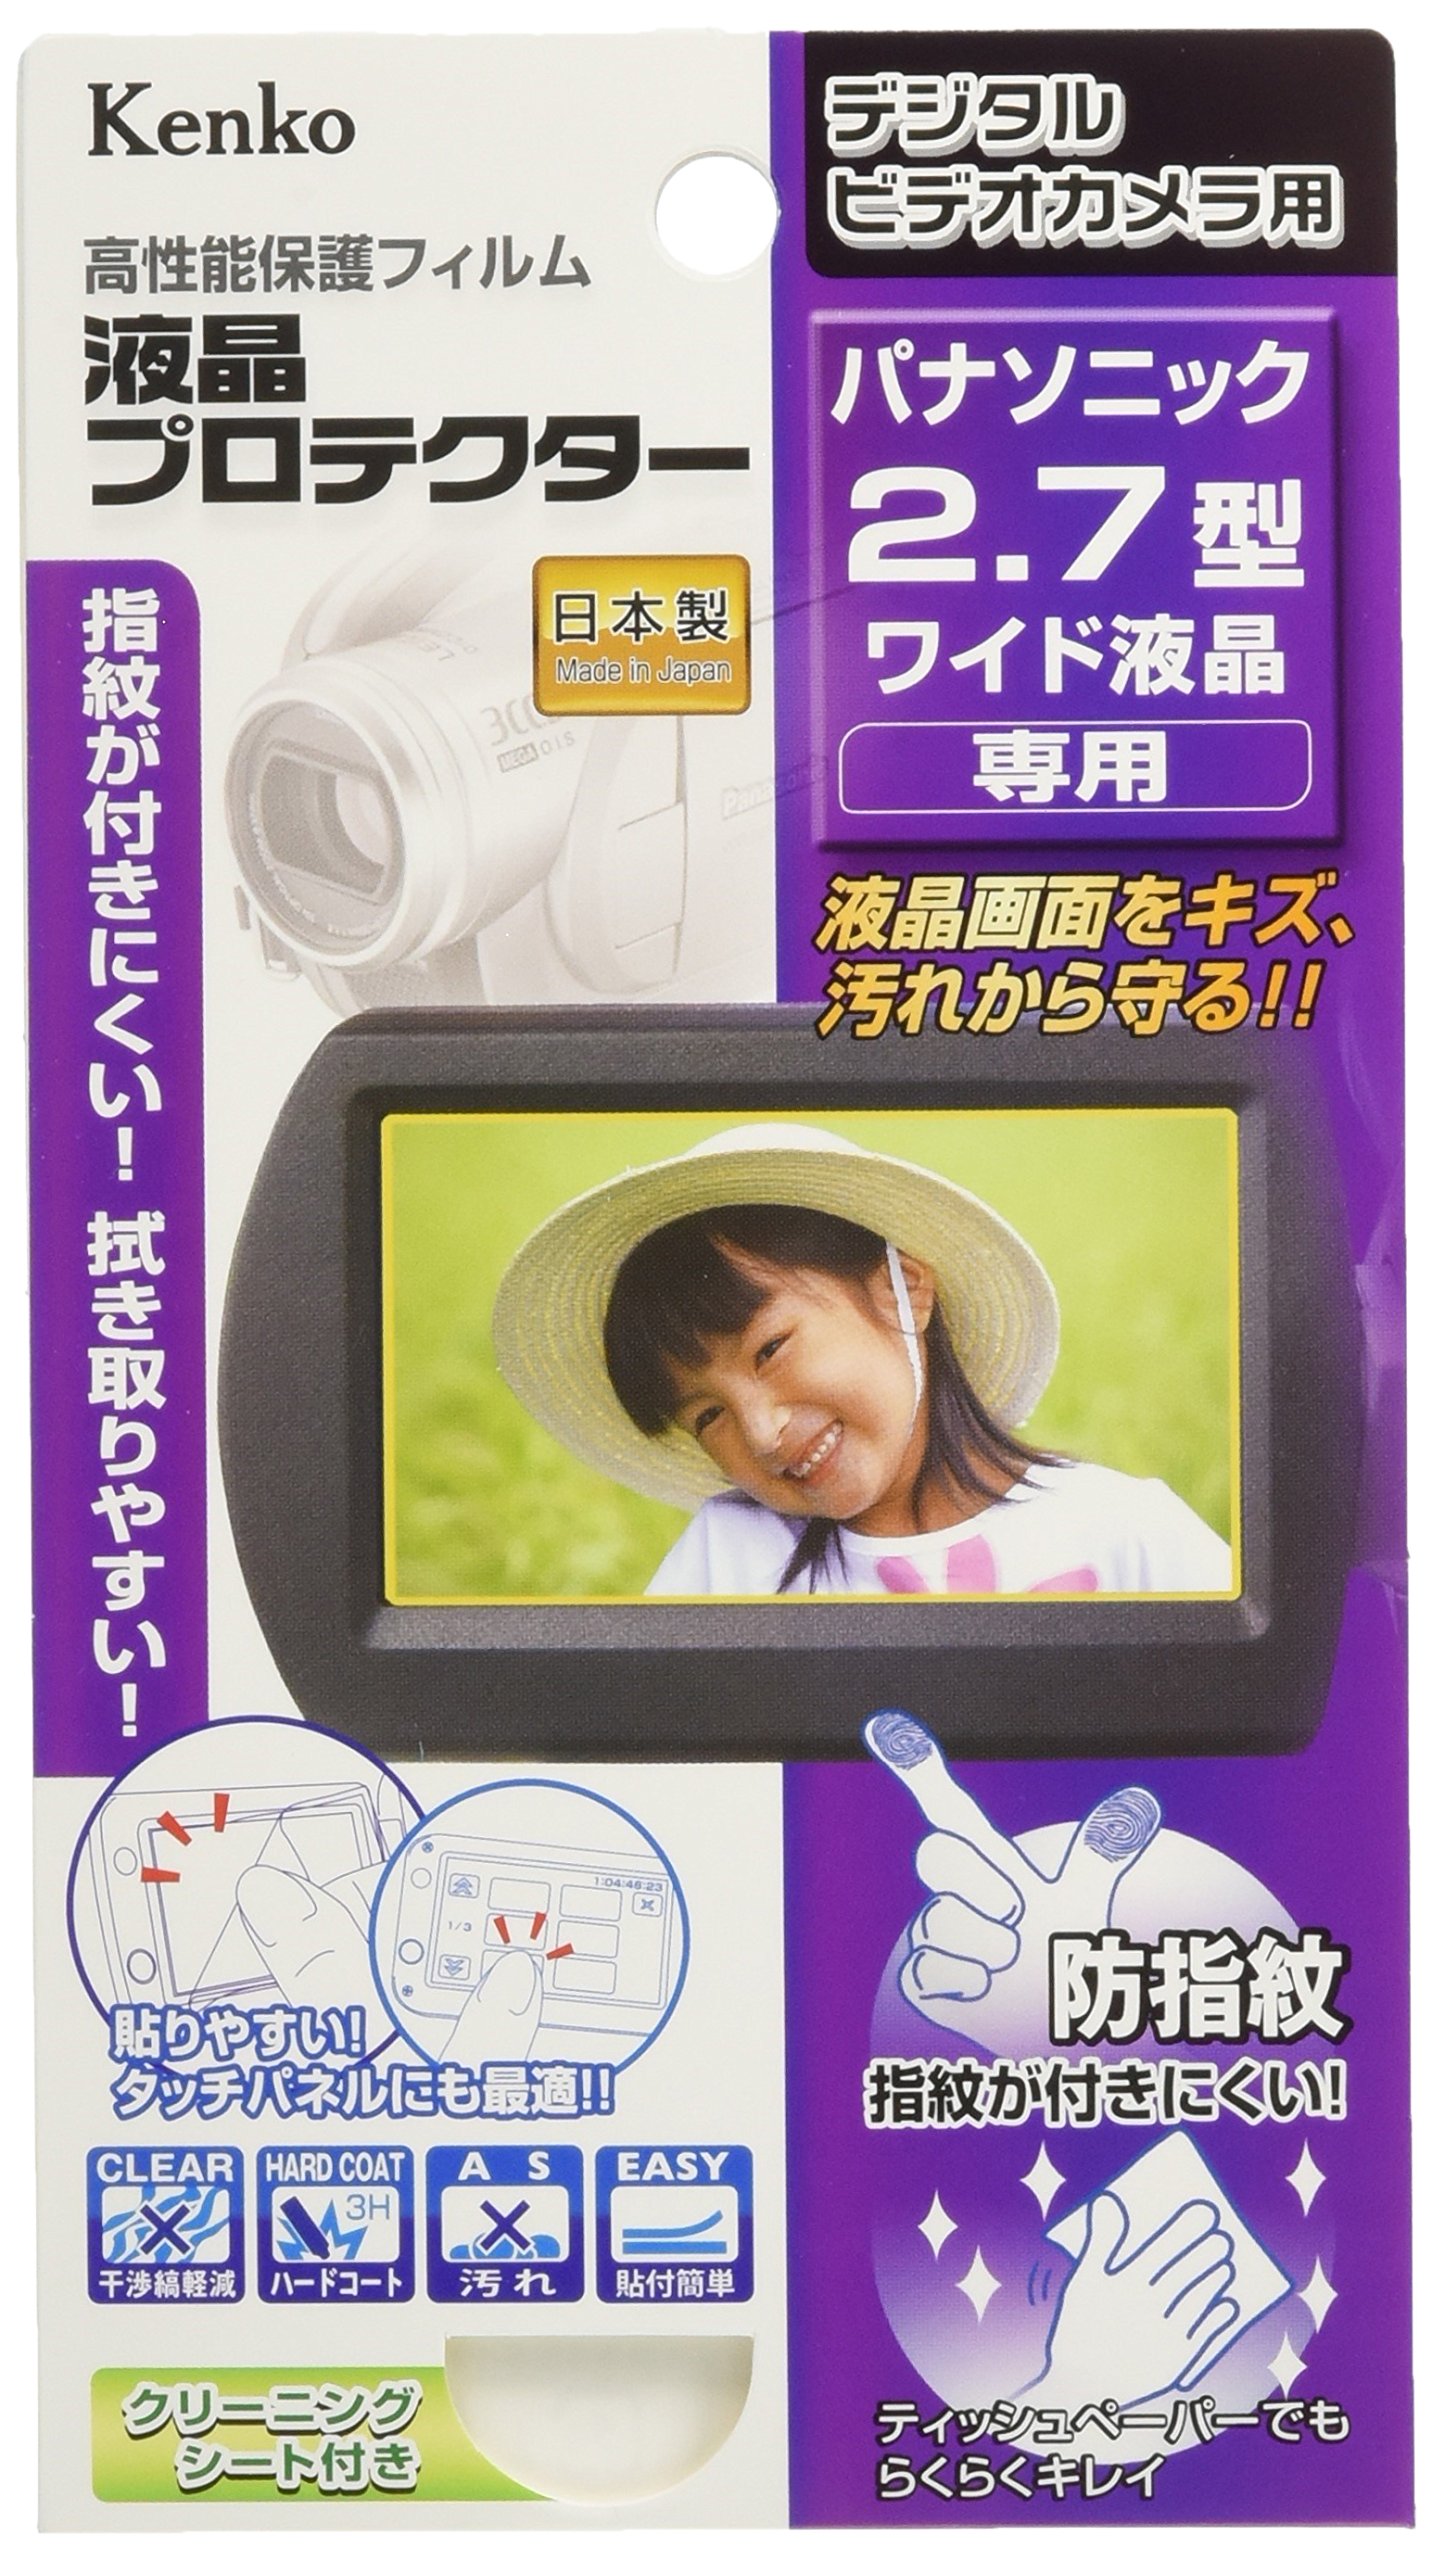 Kenko 液晶保護フィルム 液晶プロテクター Panasonic 2.7型ワイド液晶用 EPV-PA27W-AFP